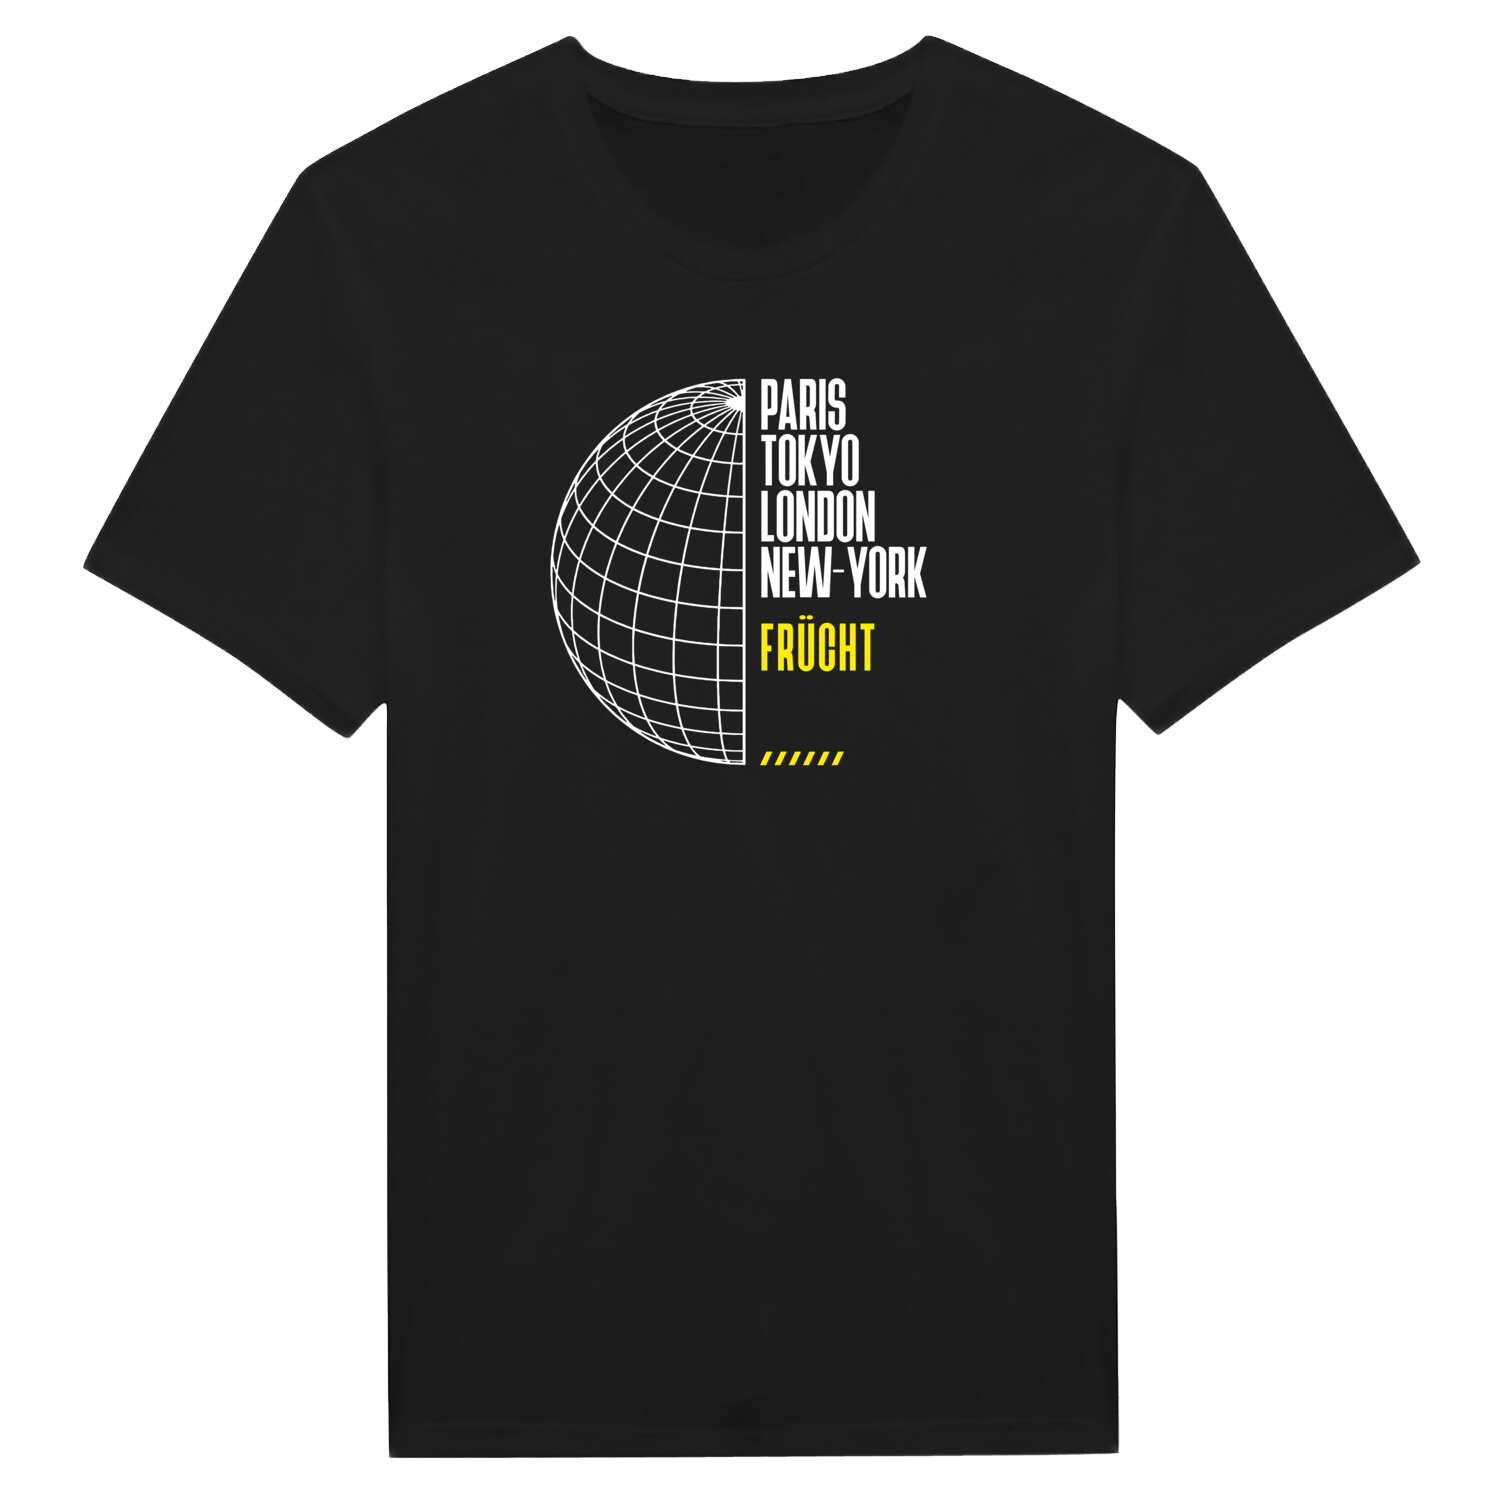 Frücht T-Shirt »Paris Tokyo London«